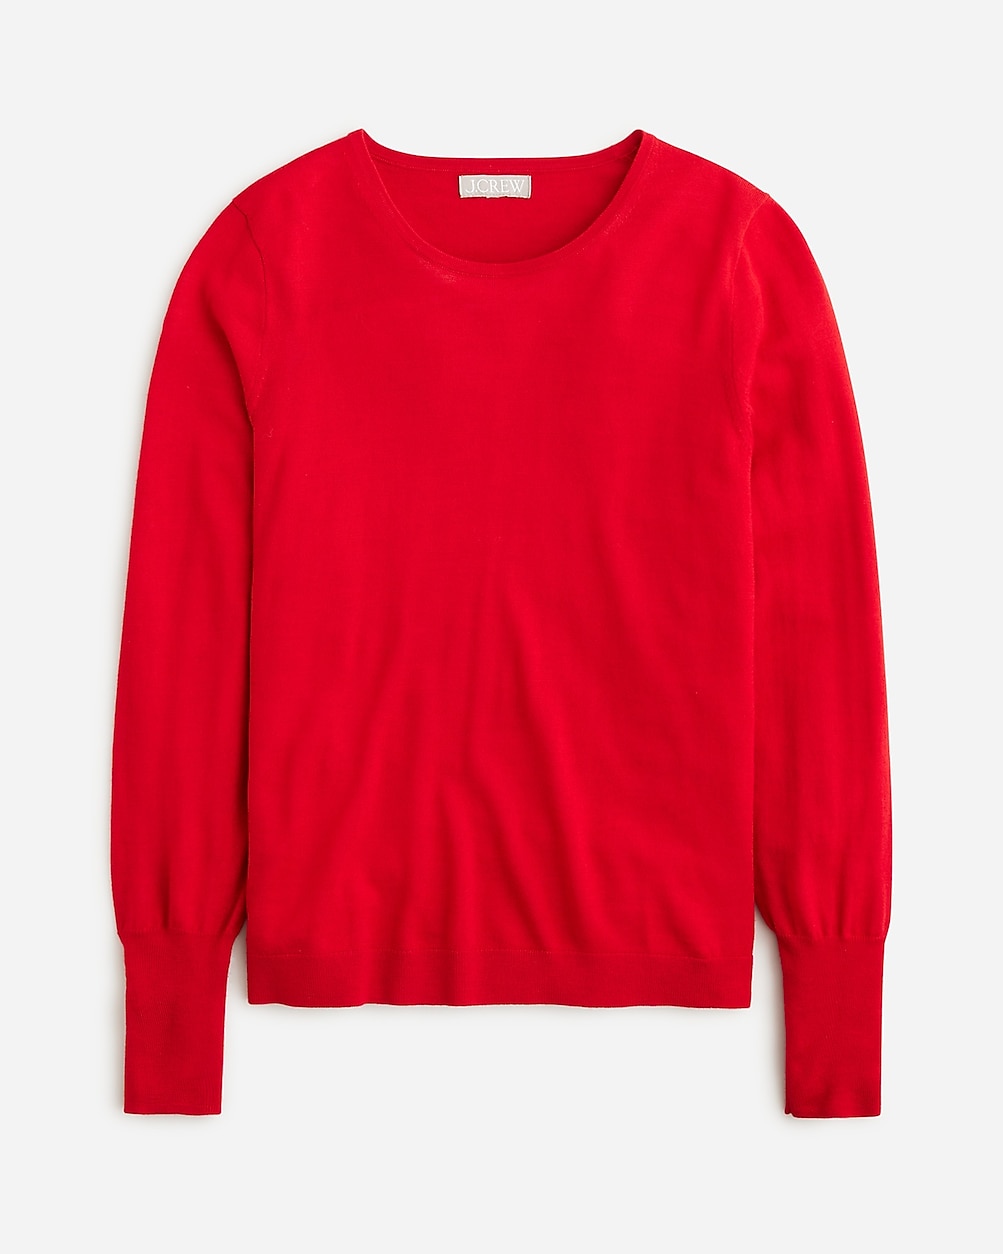 Halle crewneck sweater